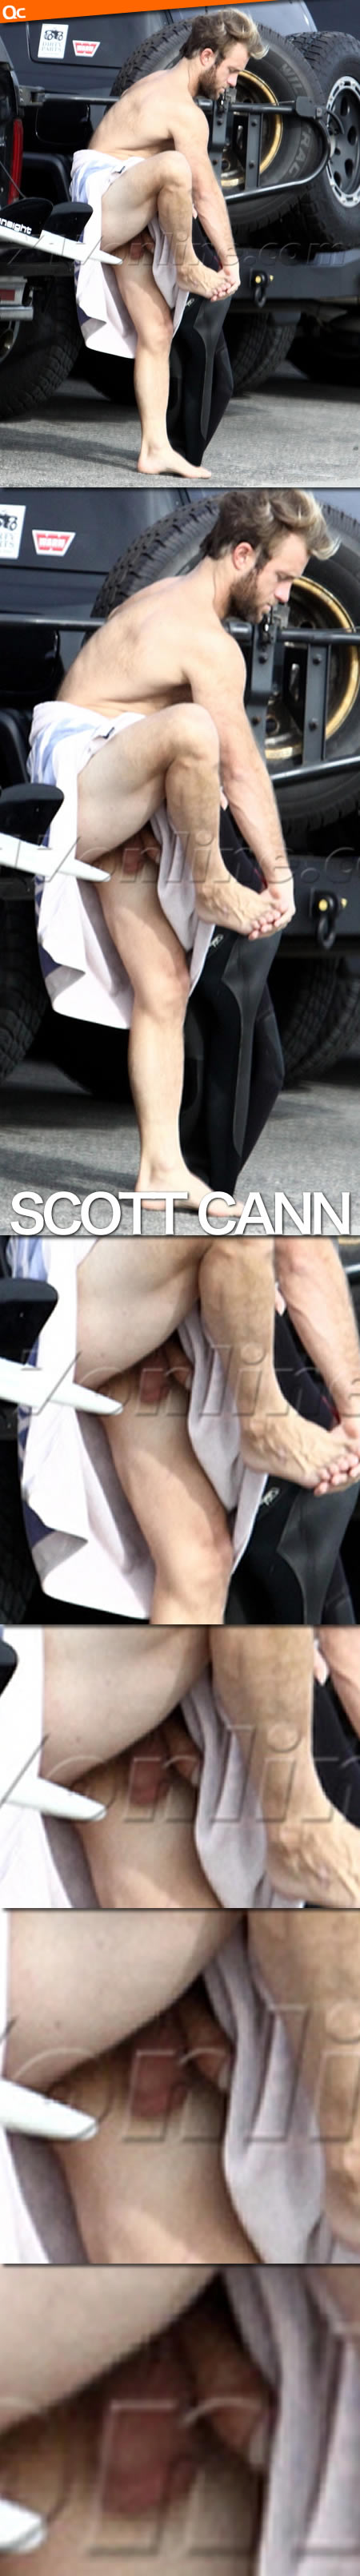 Scott Caan's Balls and Penis